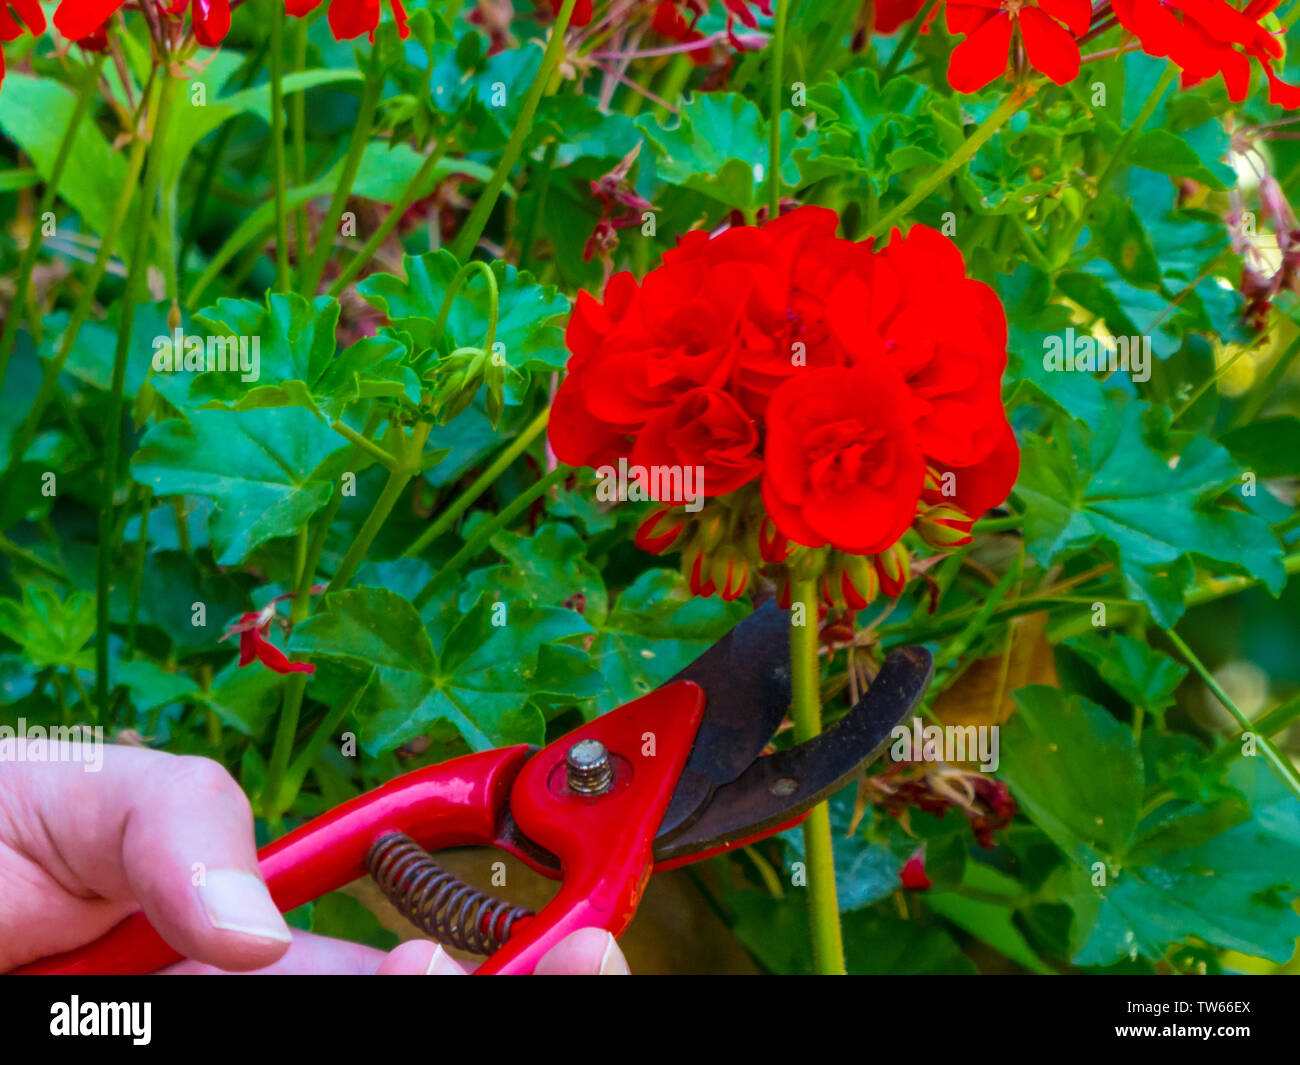 hand using a shears in a garden cutting a red geranium Stock Photo